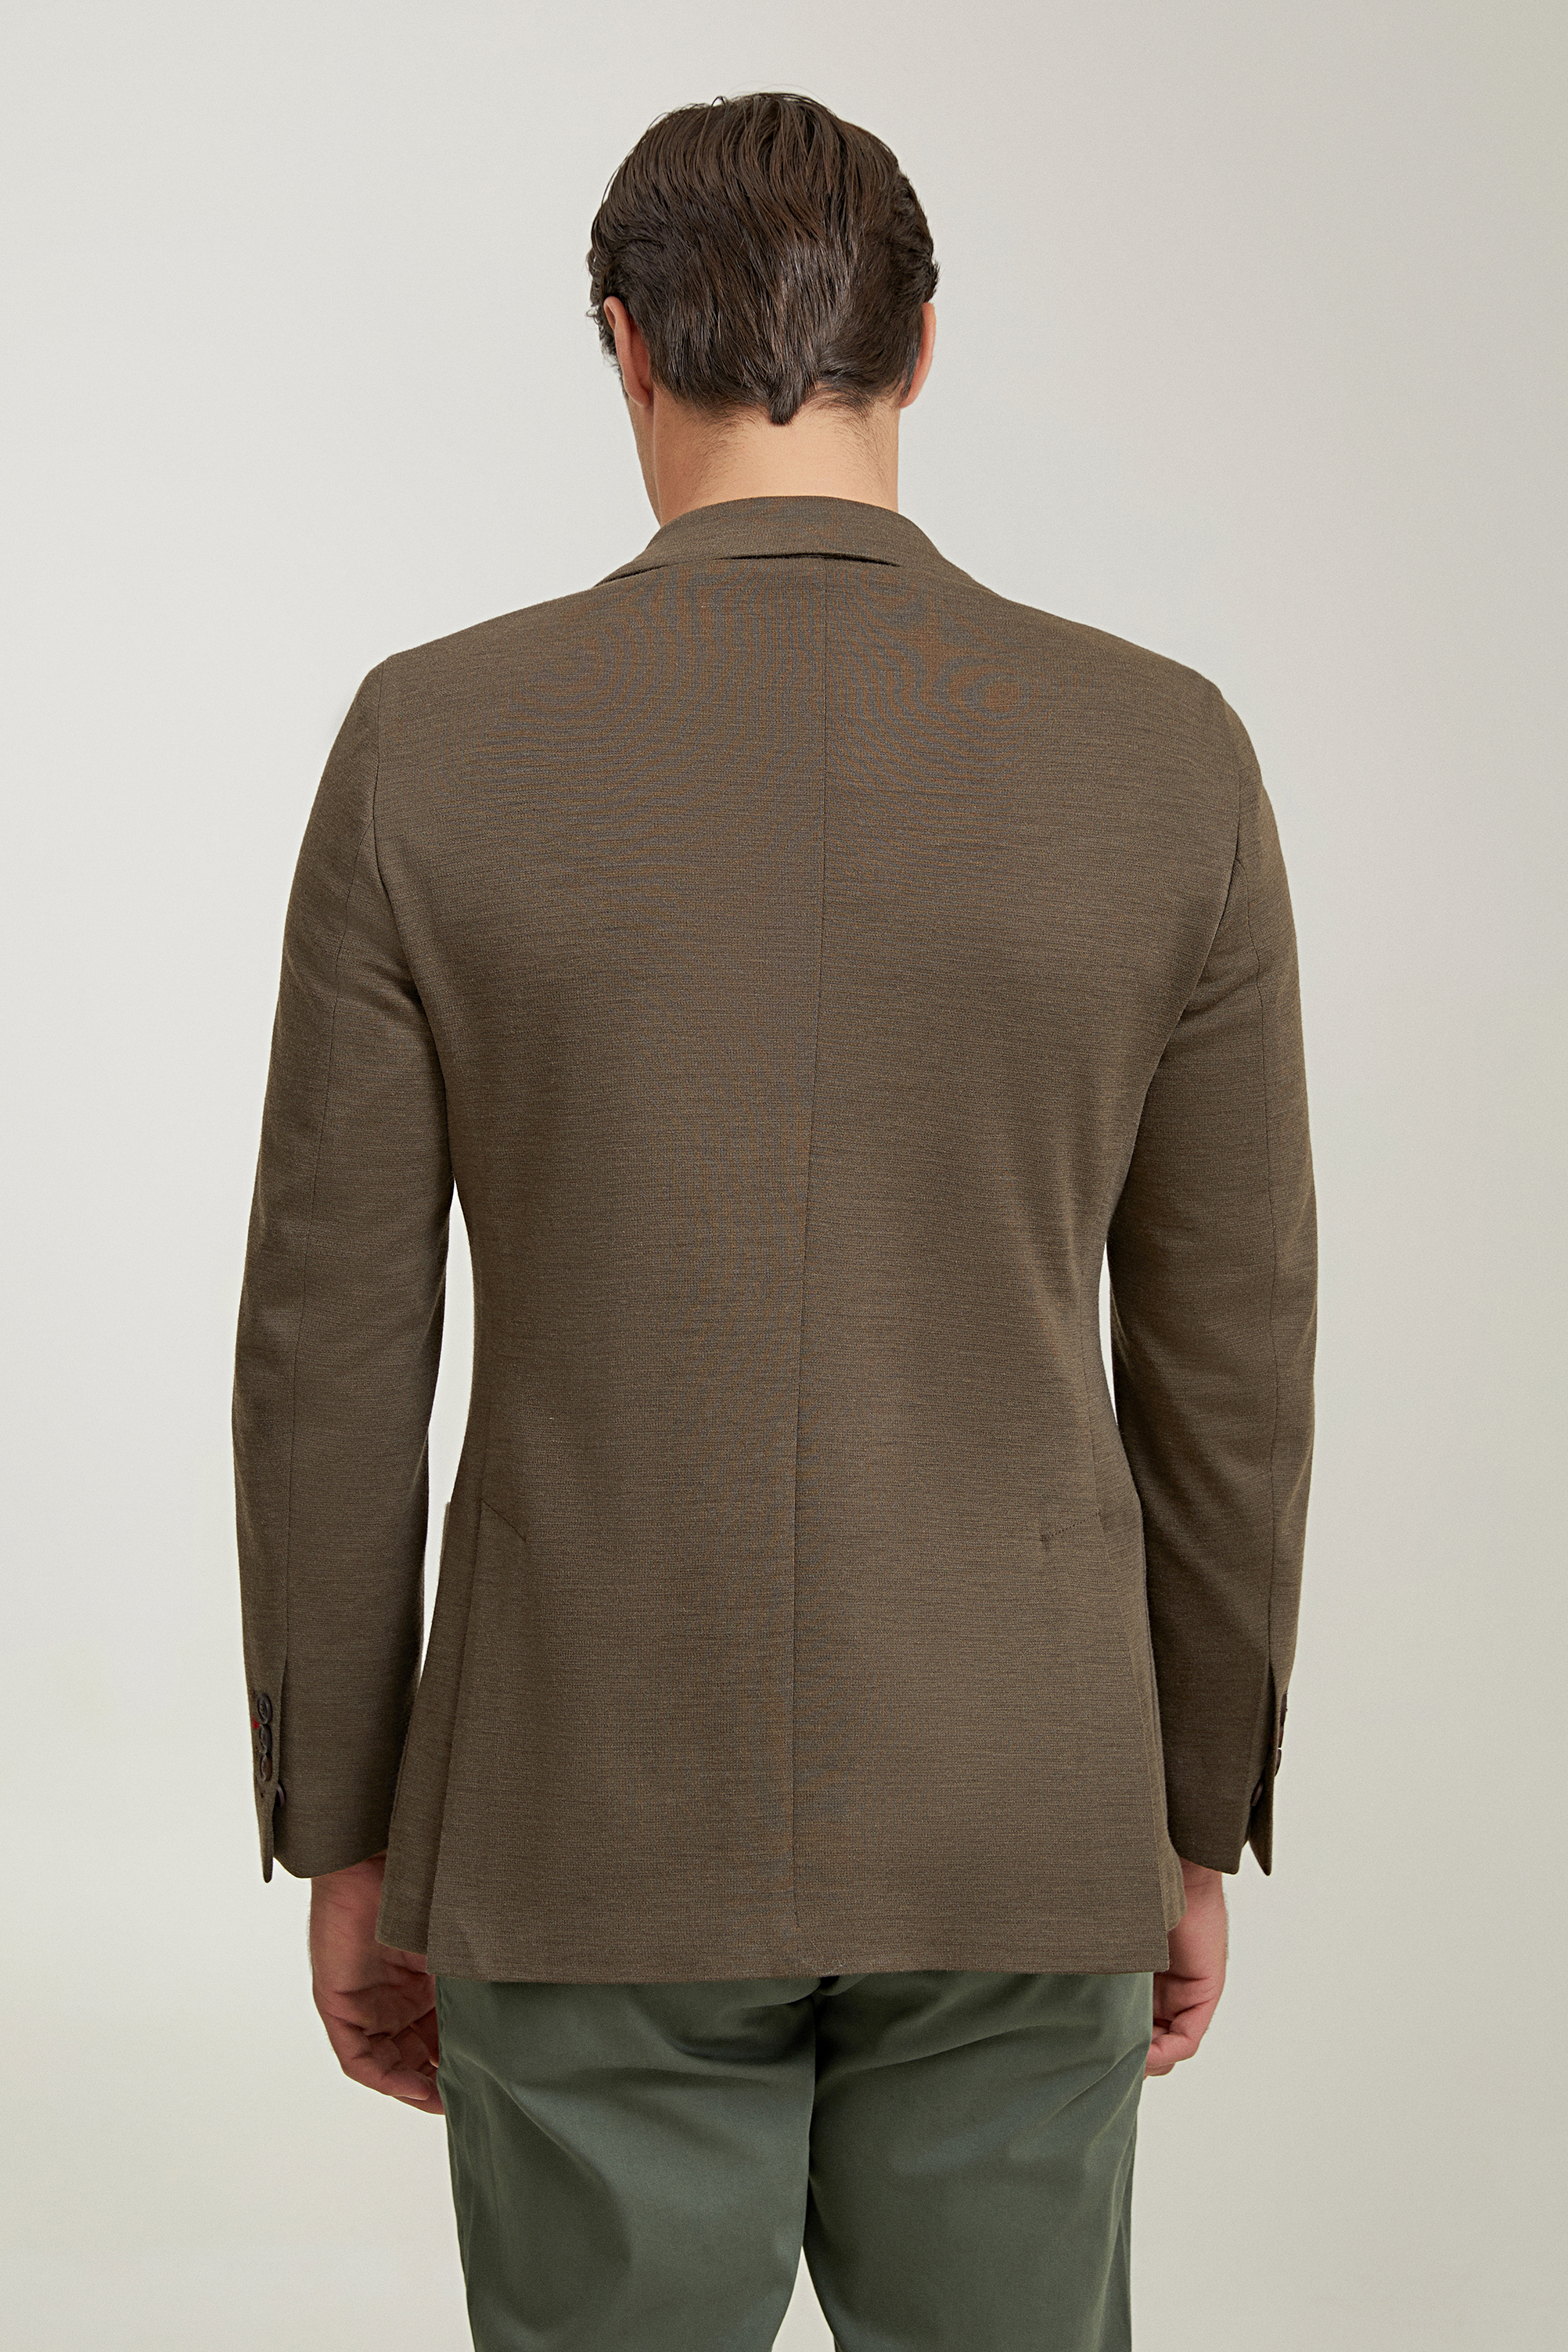 Damat Tween Damat Regular Fit Kahverengi Örme Kumaş Ceket. 4